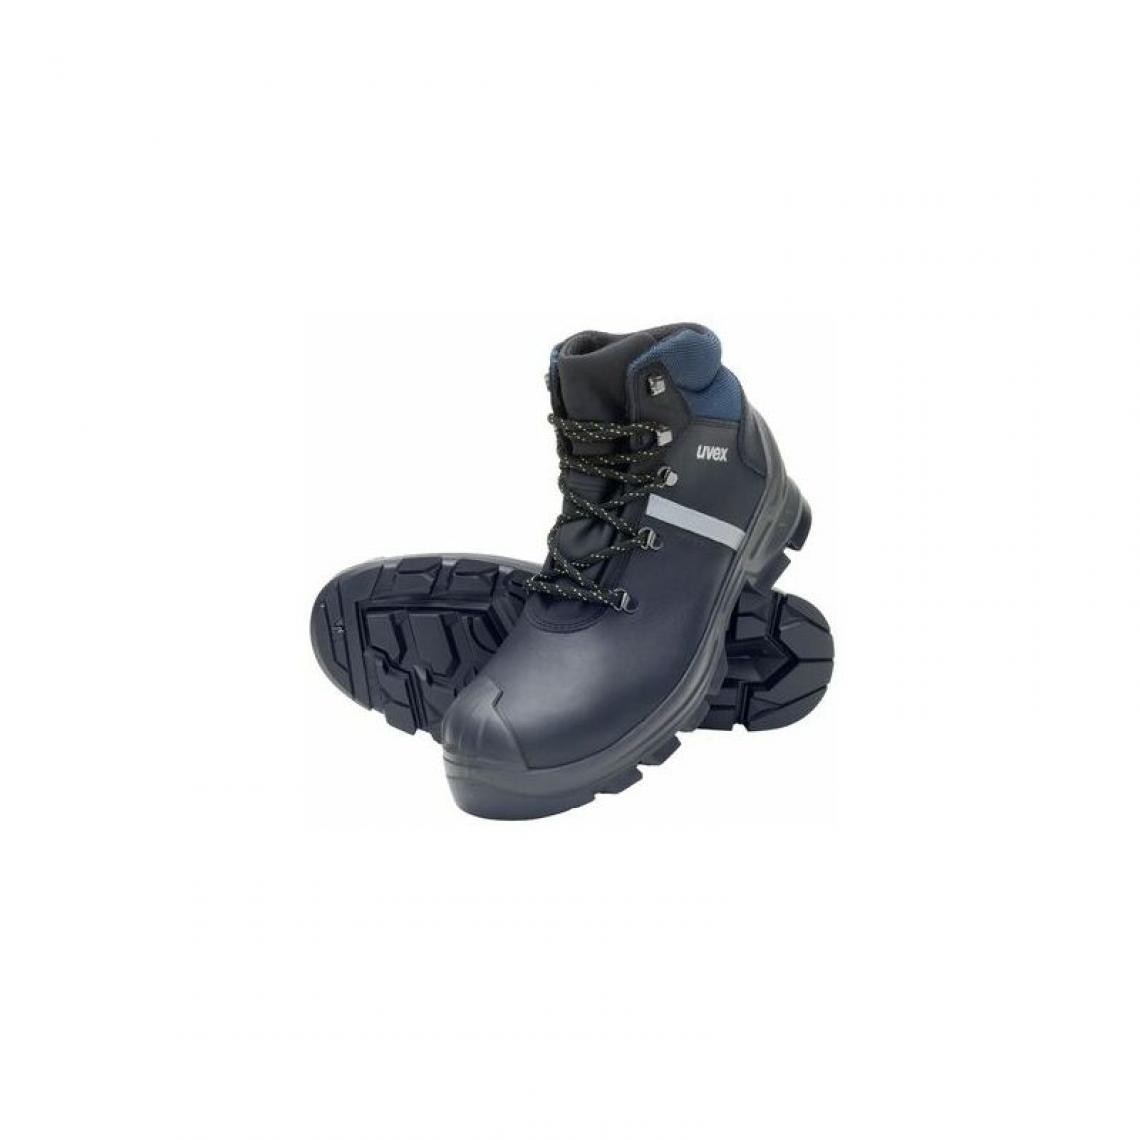 Uvex - uvex 2 Chaussures montantes construction S3, pointure 43 () - Equipement de Protection Individuelle